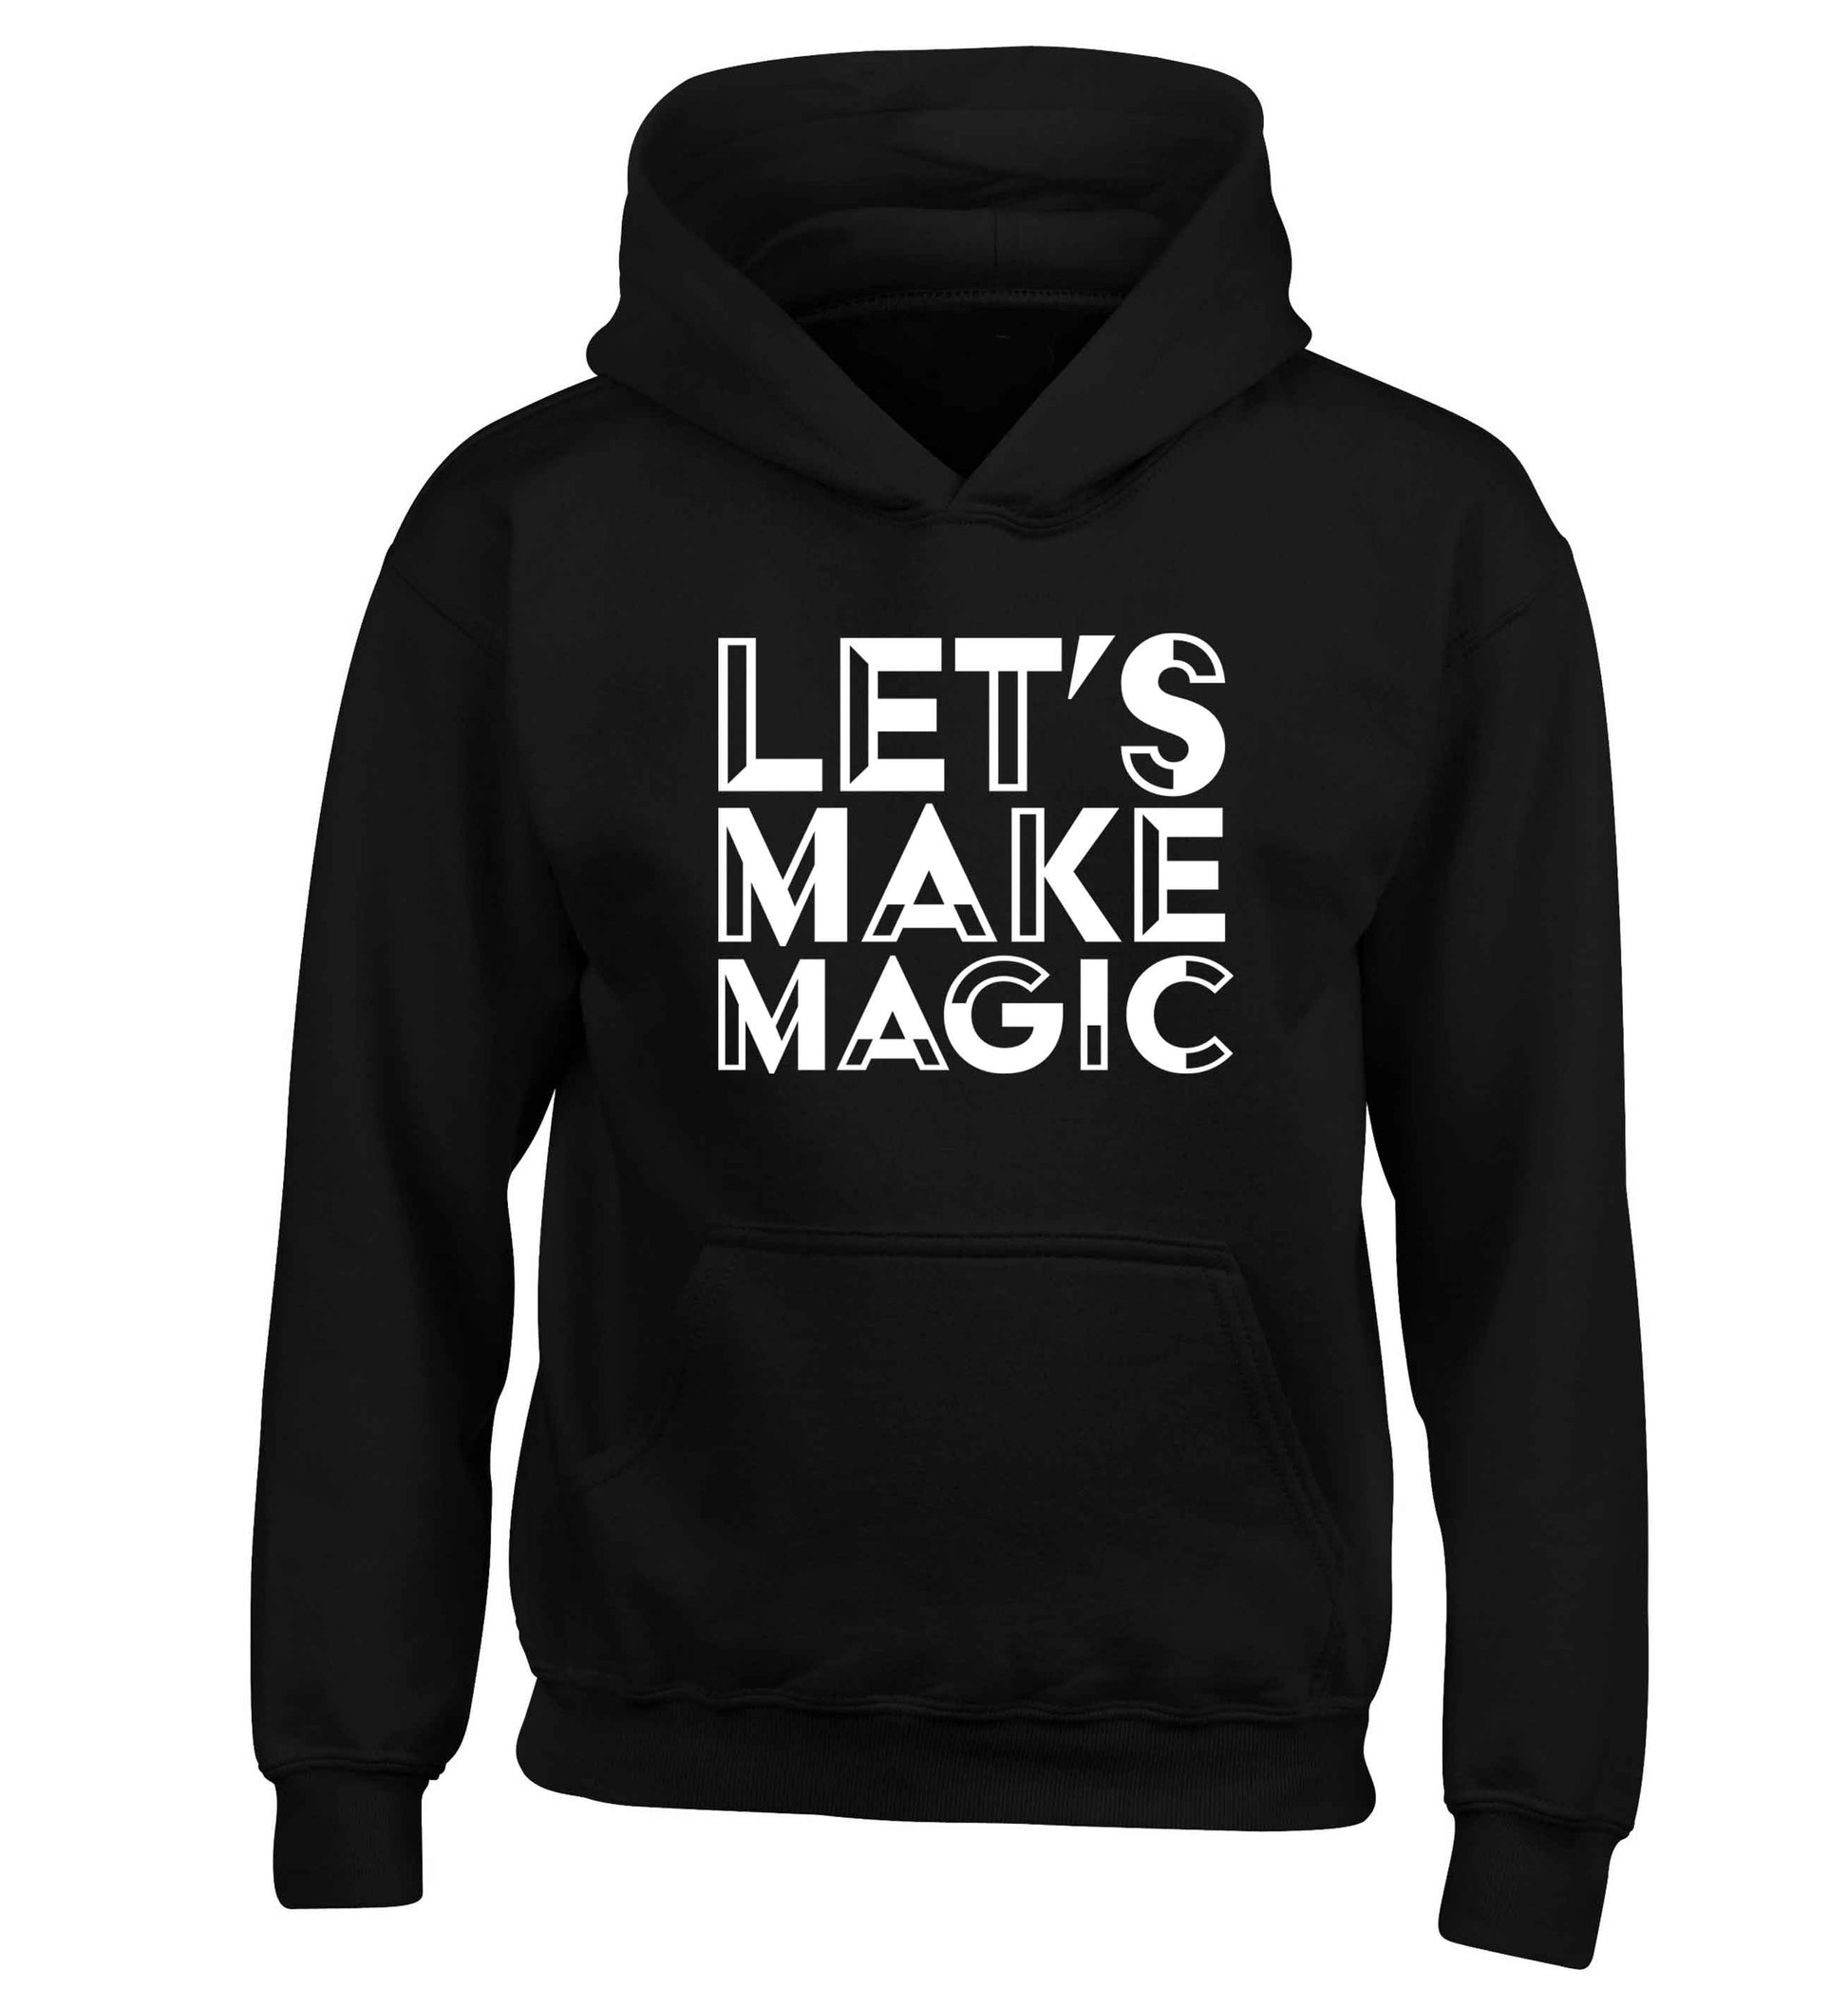 Let's make magic children's black hoodie 12-13 Years